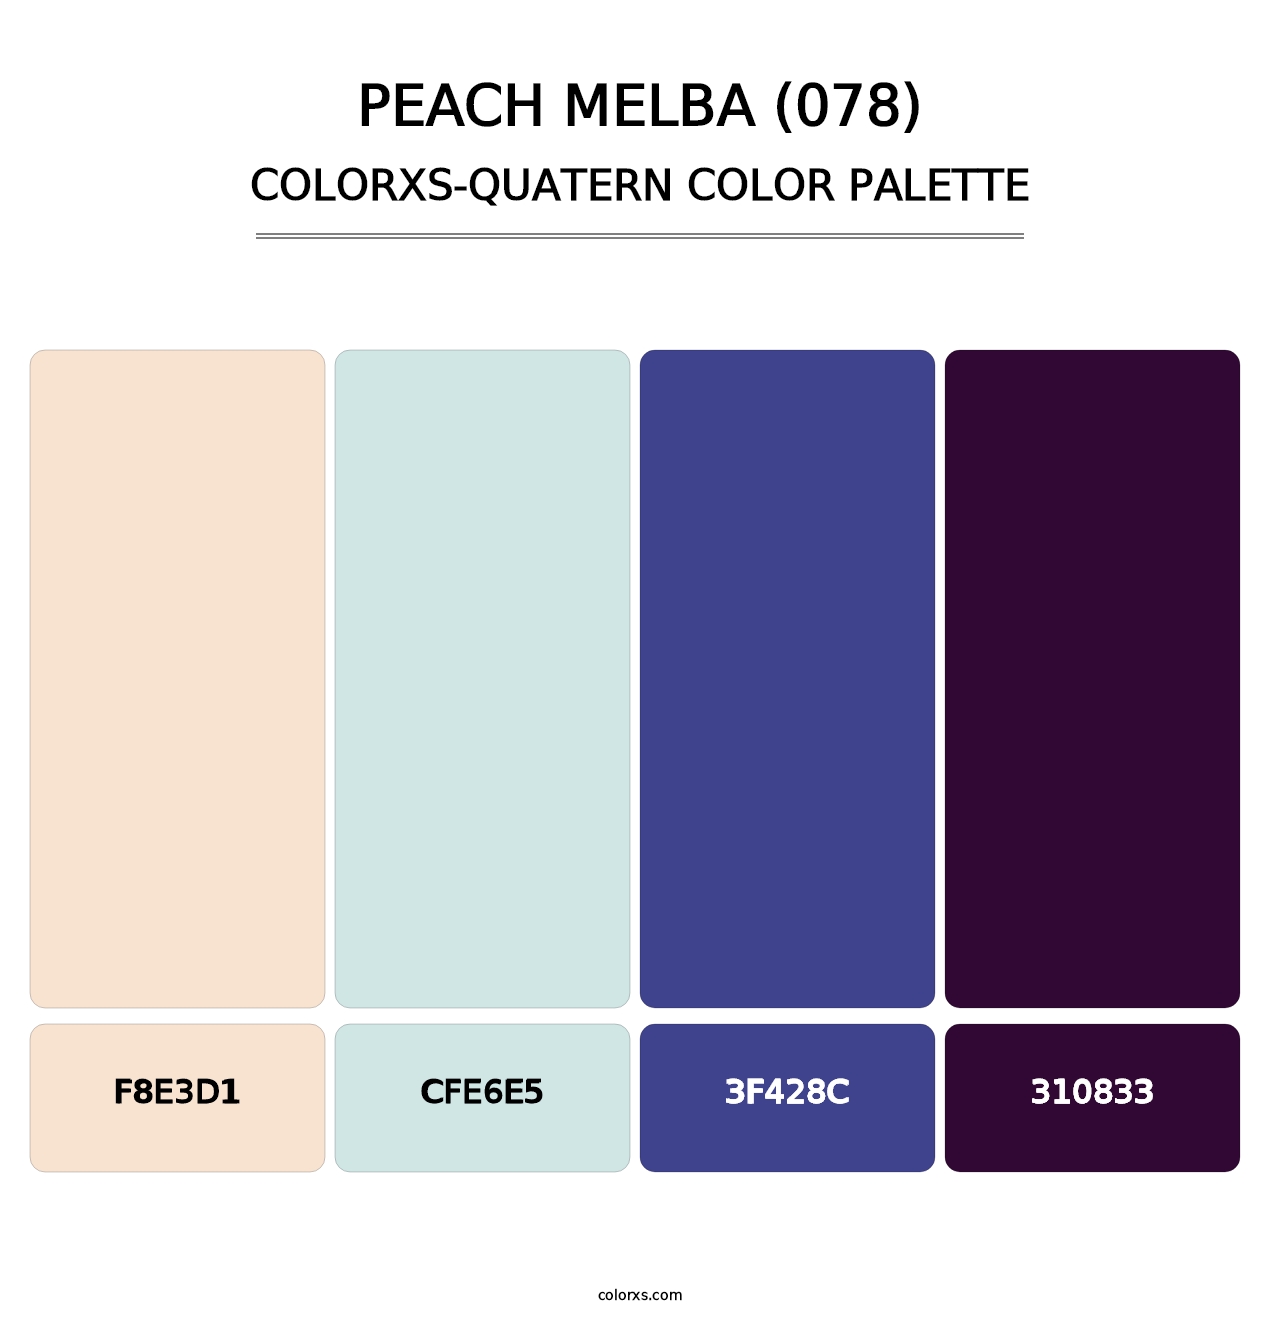 Peach Melba (078) - Colorxs Quatern Palette